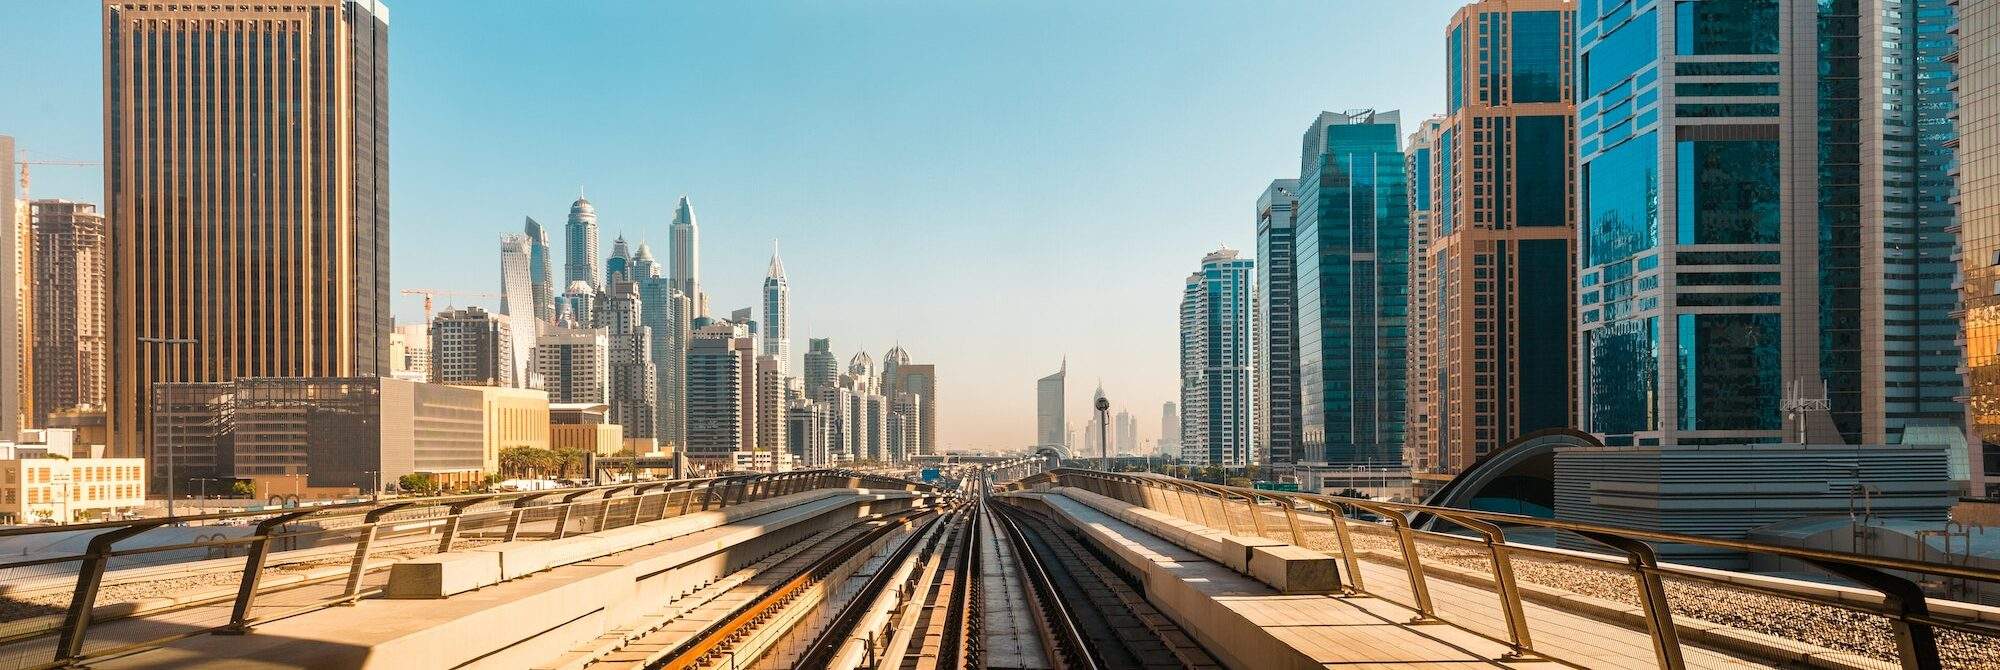 View of the Dubai downtown skyline from a metro station, Dubai, UAE